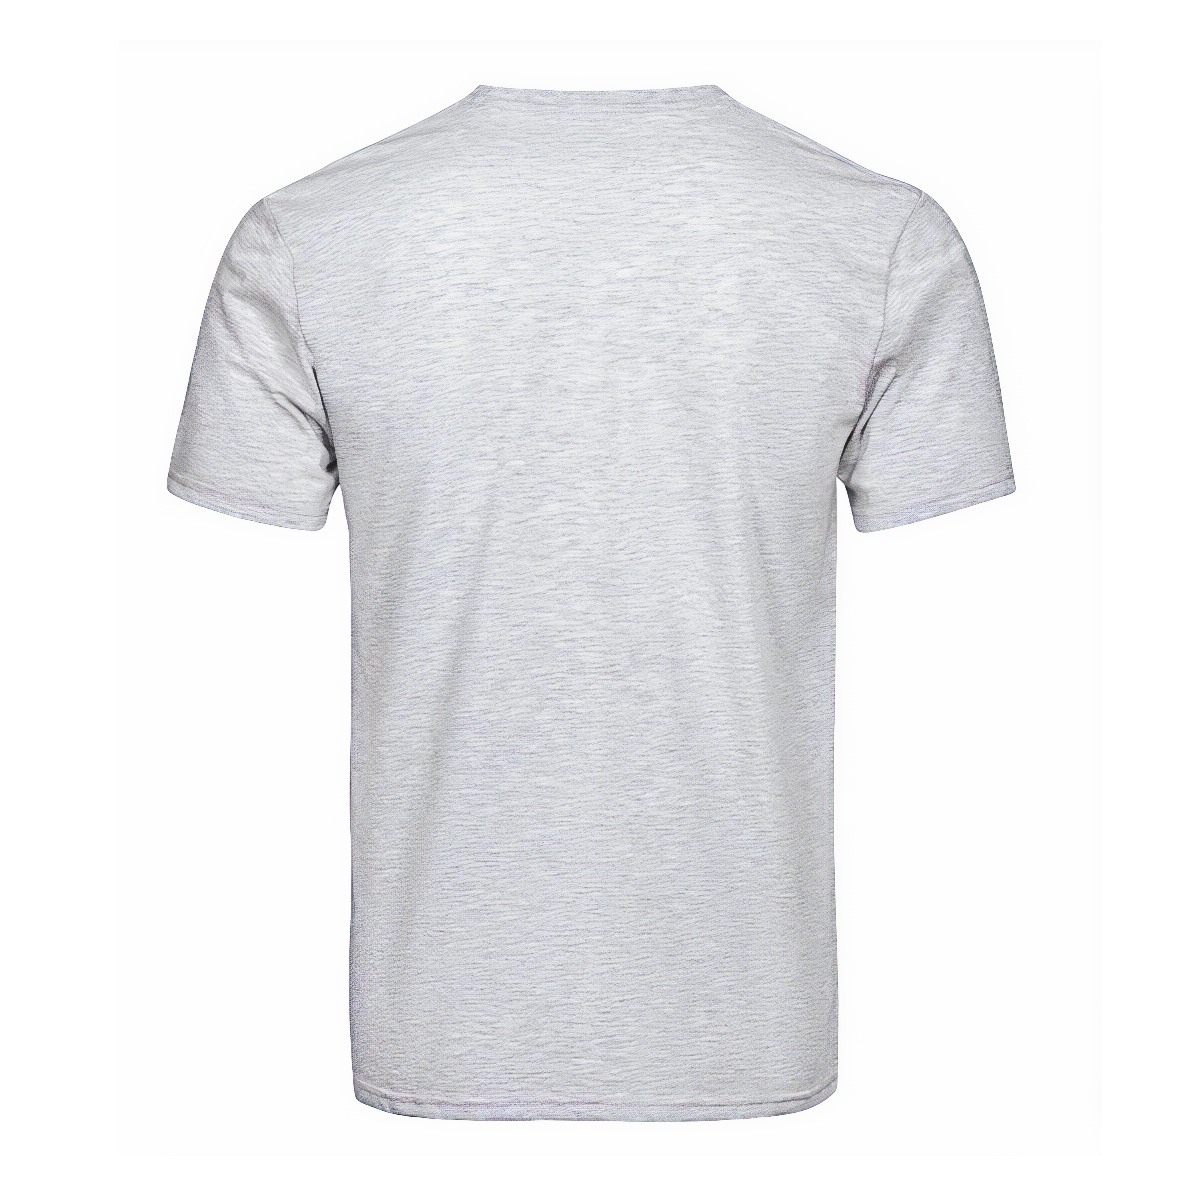 Glen Tartan Crest T-shirt - I'm not yelling style